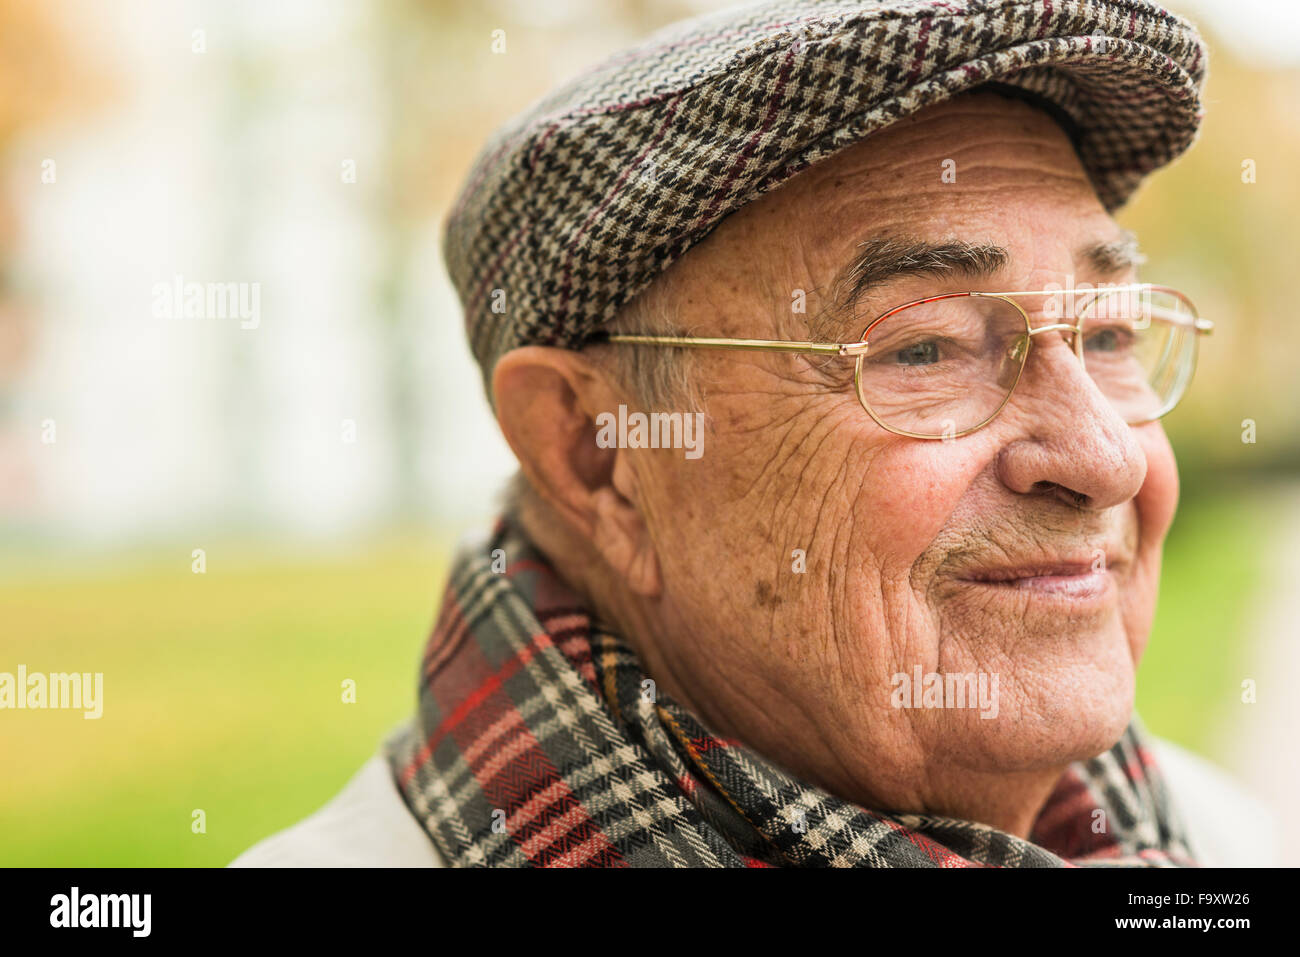 Smiling senior man outdoors Banque D'Images